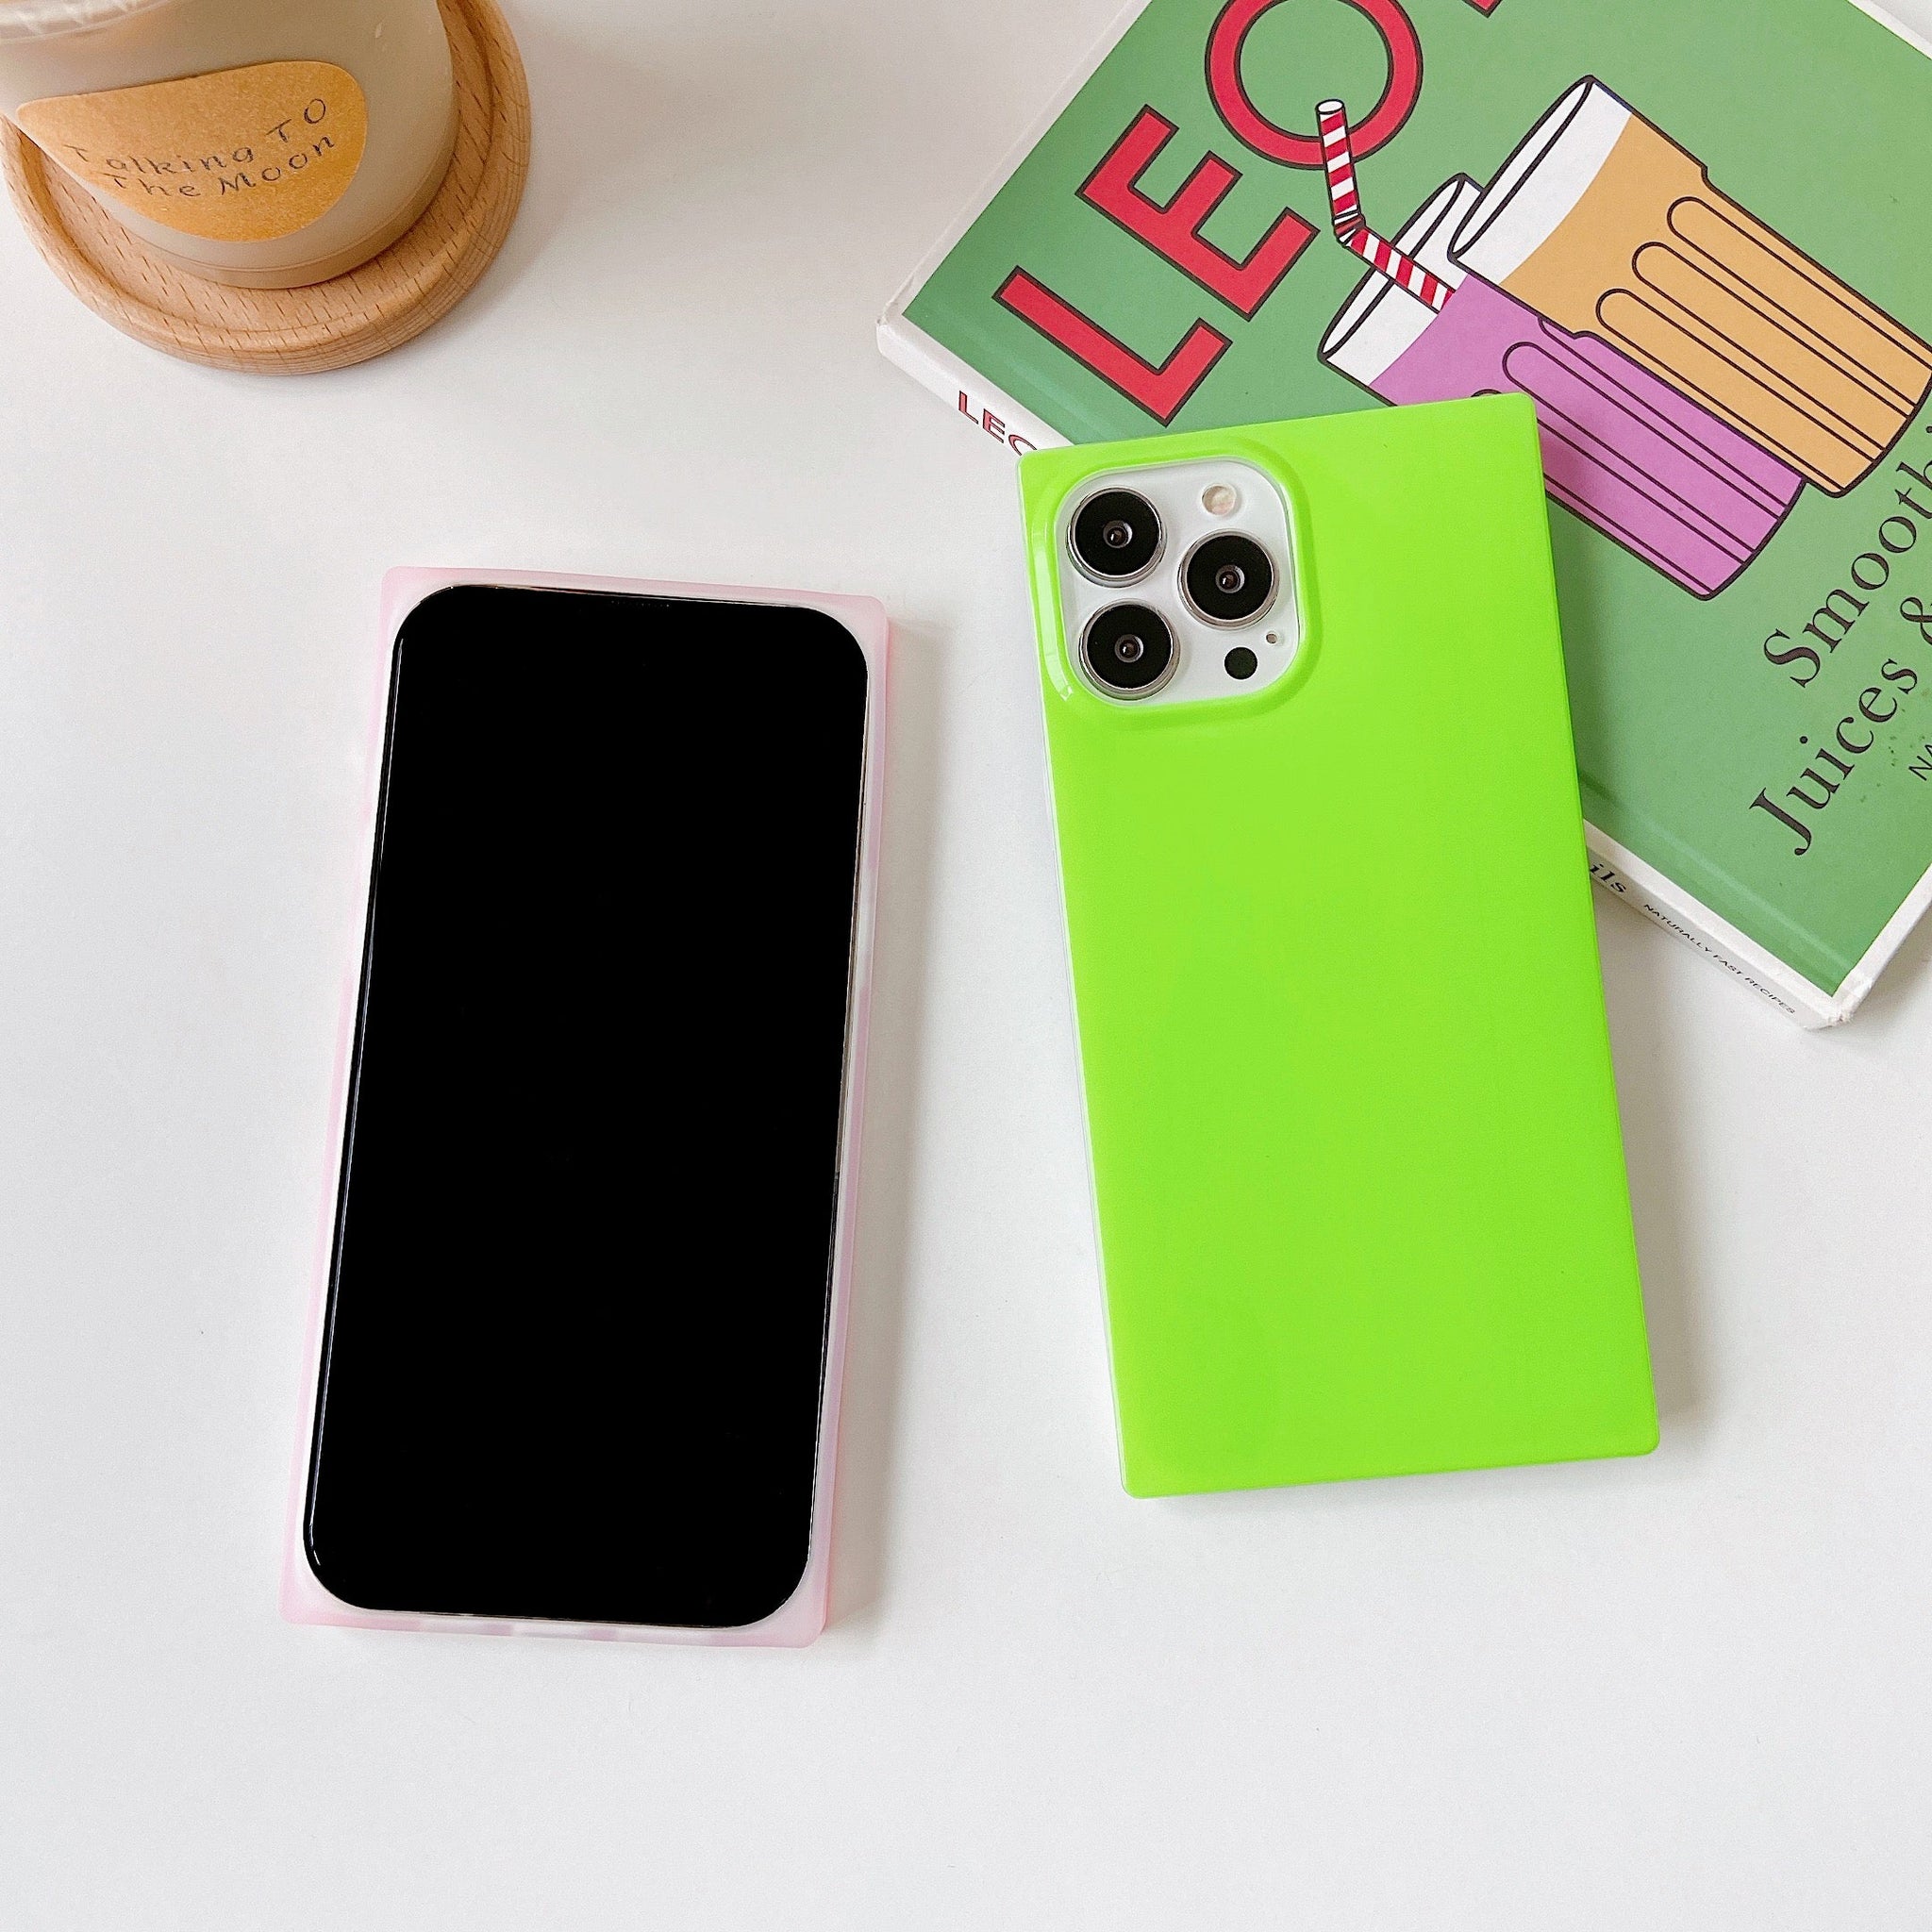 iPhone 11 Pro Max Case Square Neon Plain Color (Neon Pink)